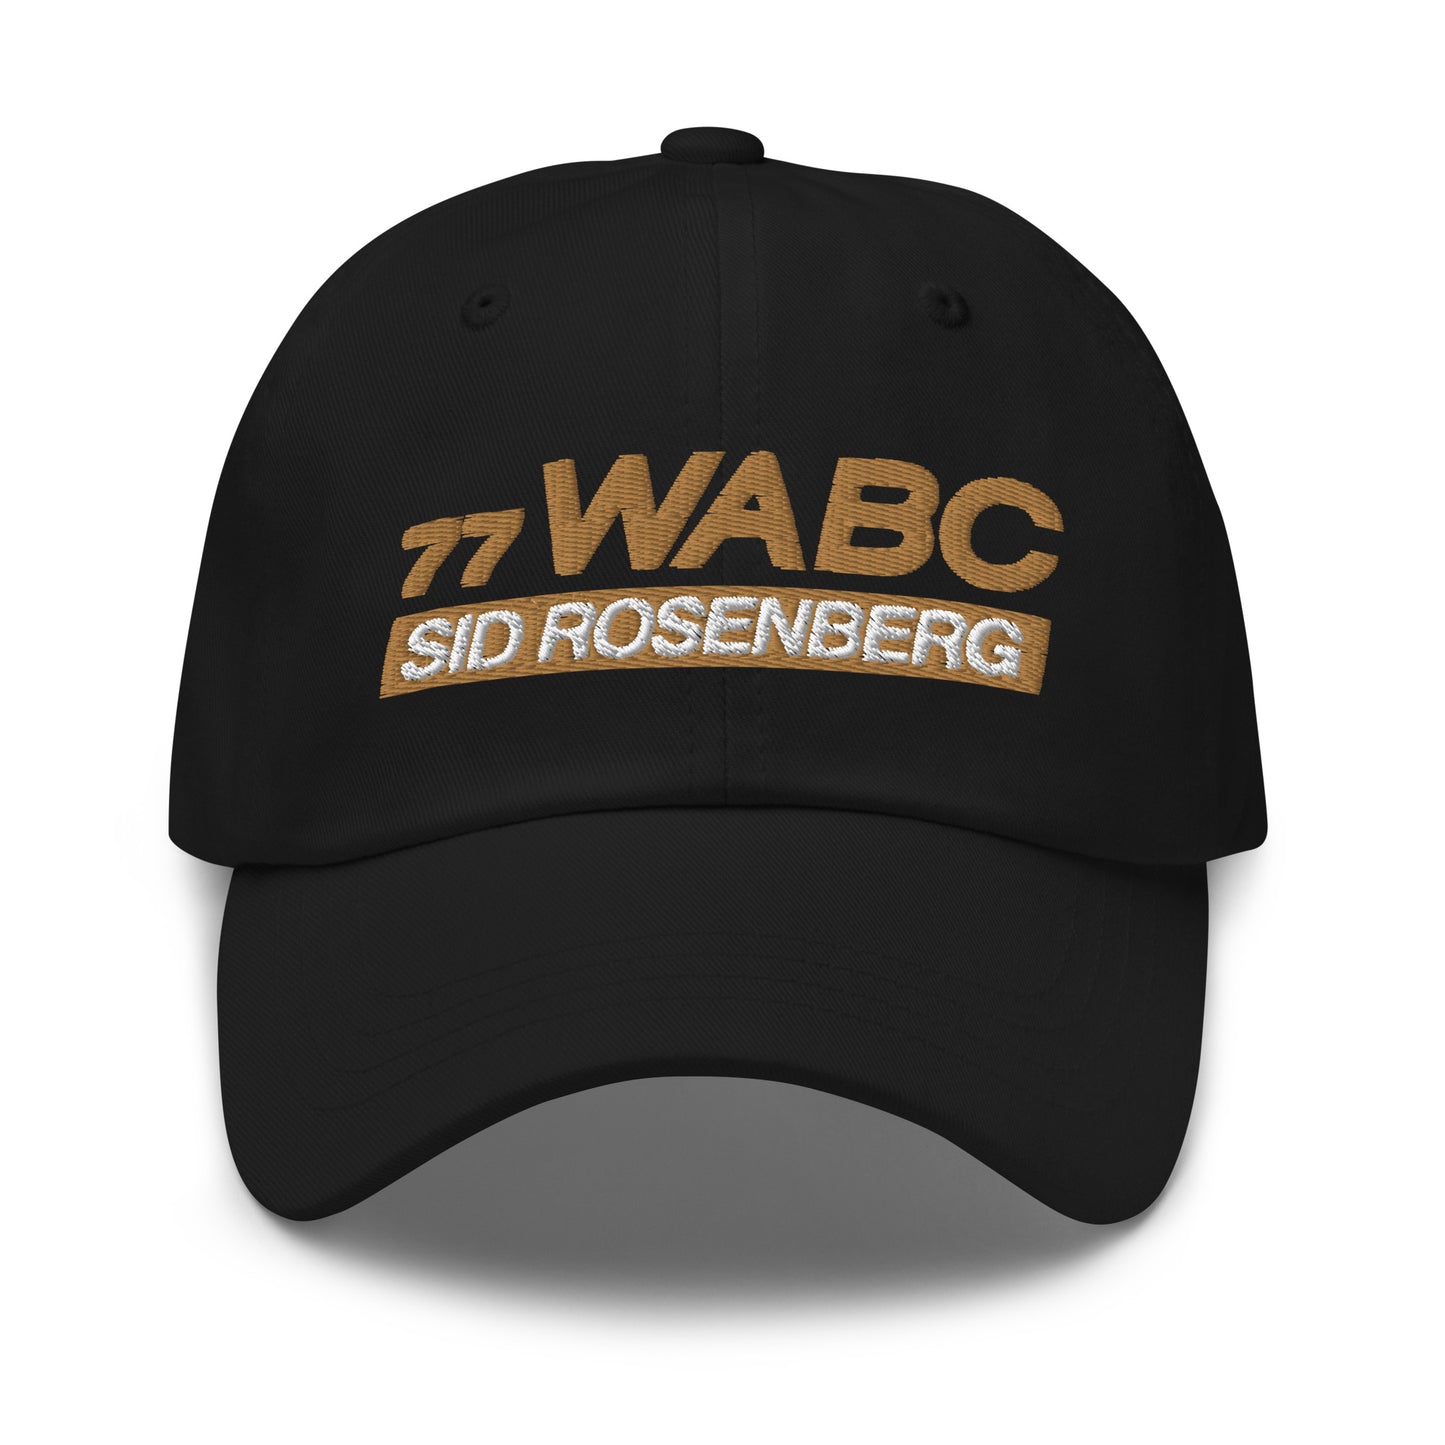 Sid Rosenberg 77 WABC Hat